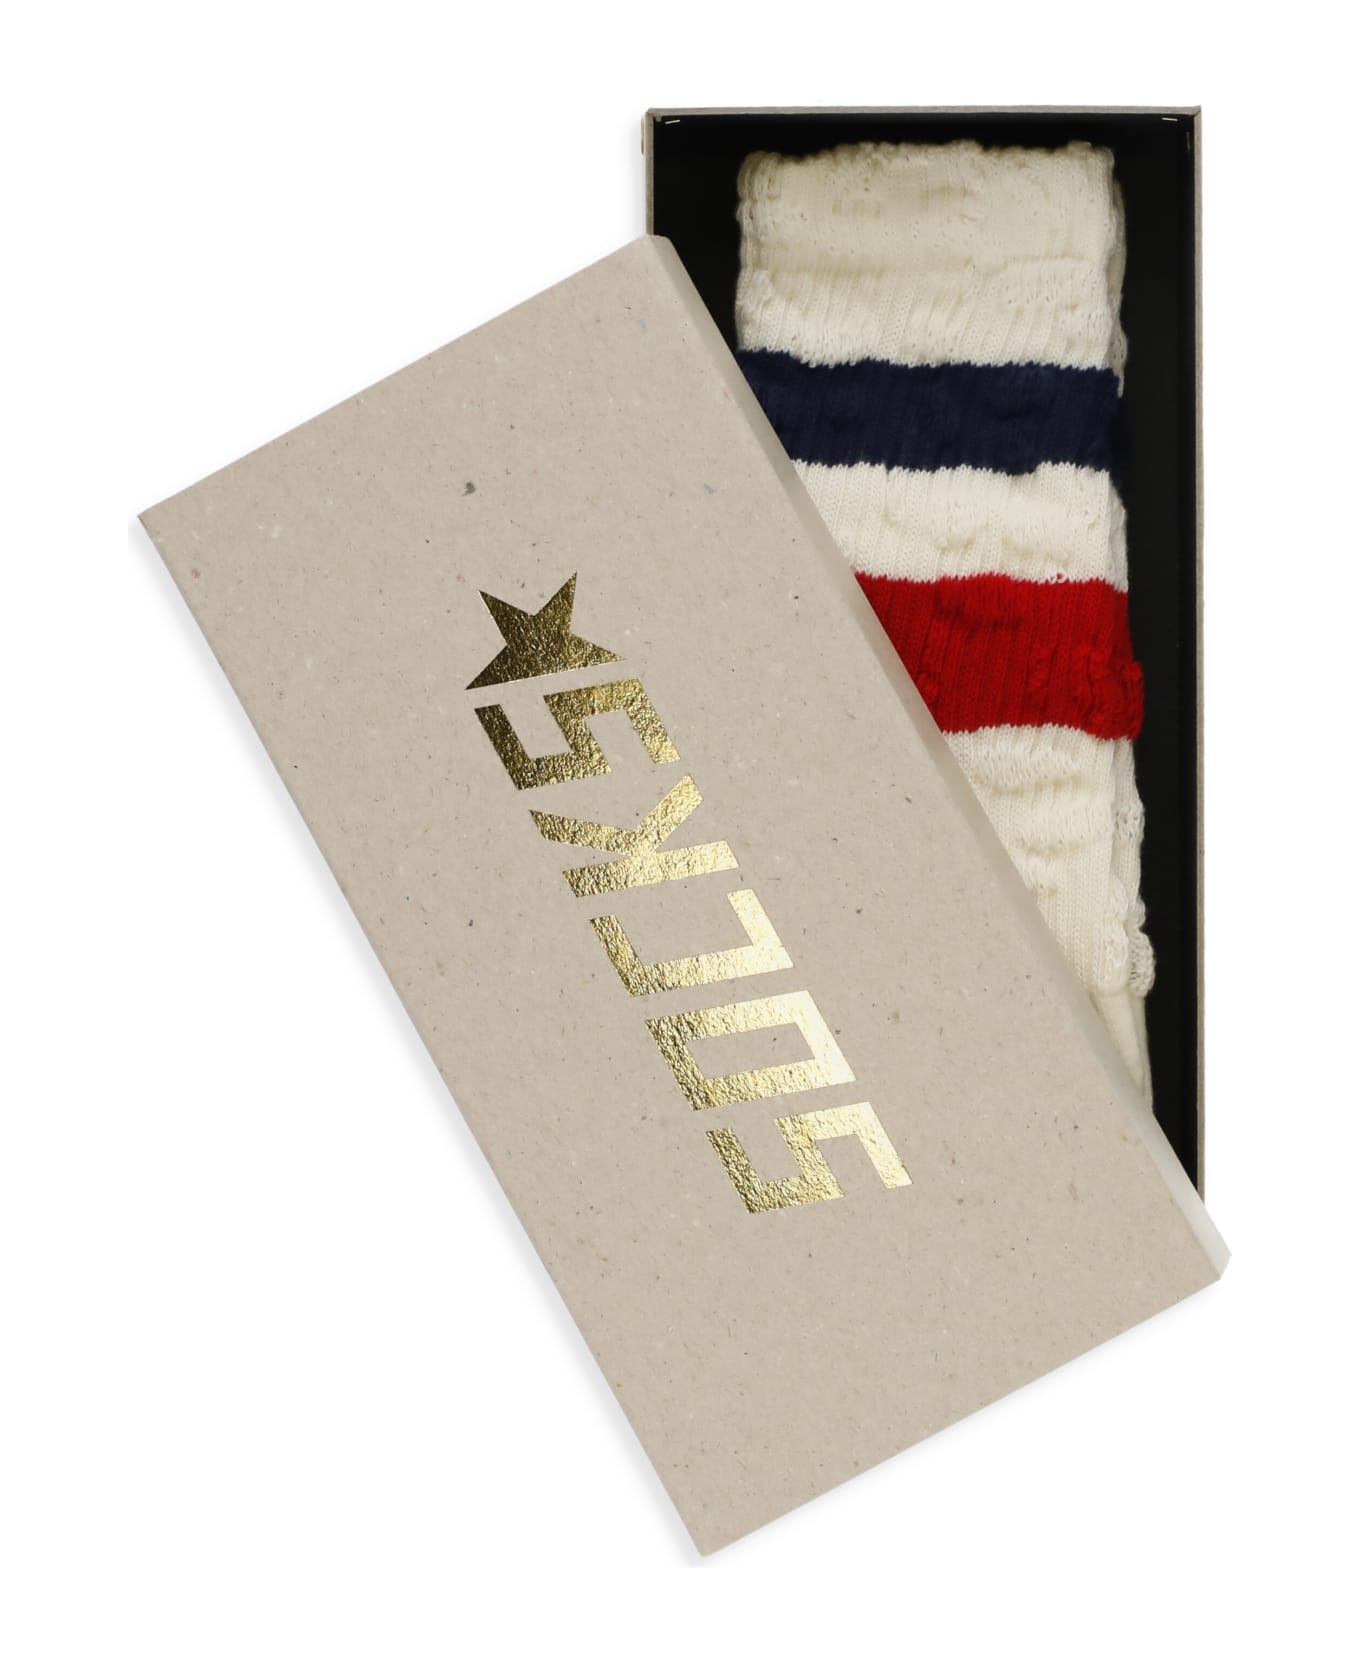 Golden Goose Striped Detail Socks - Old White Red Navy Green Fluo 靴下＆タイツ